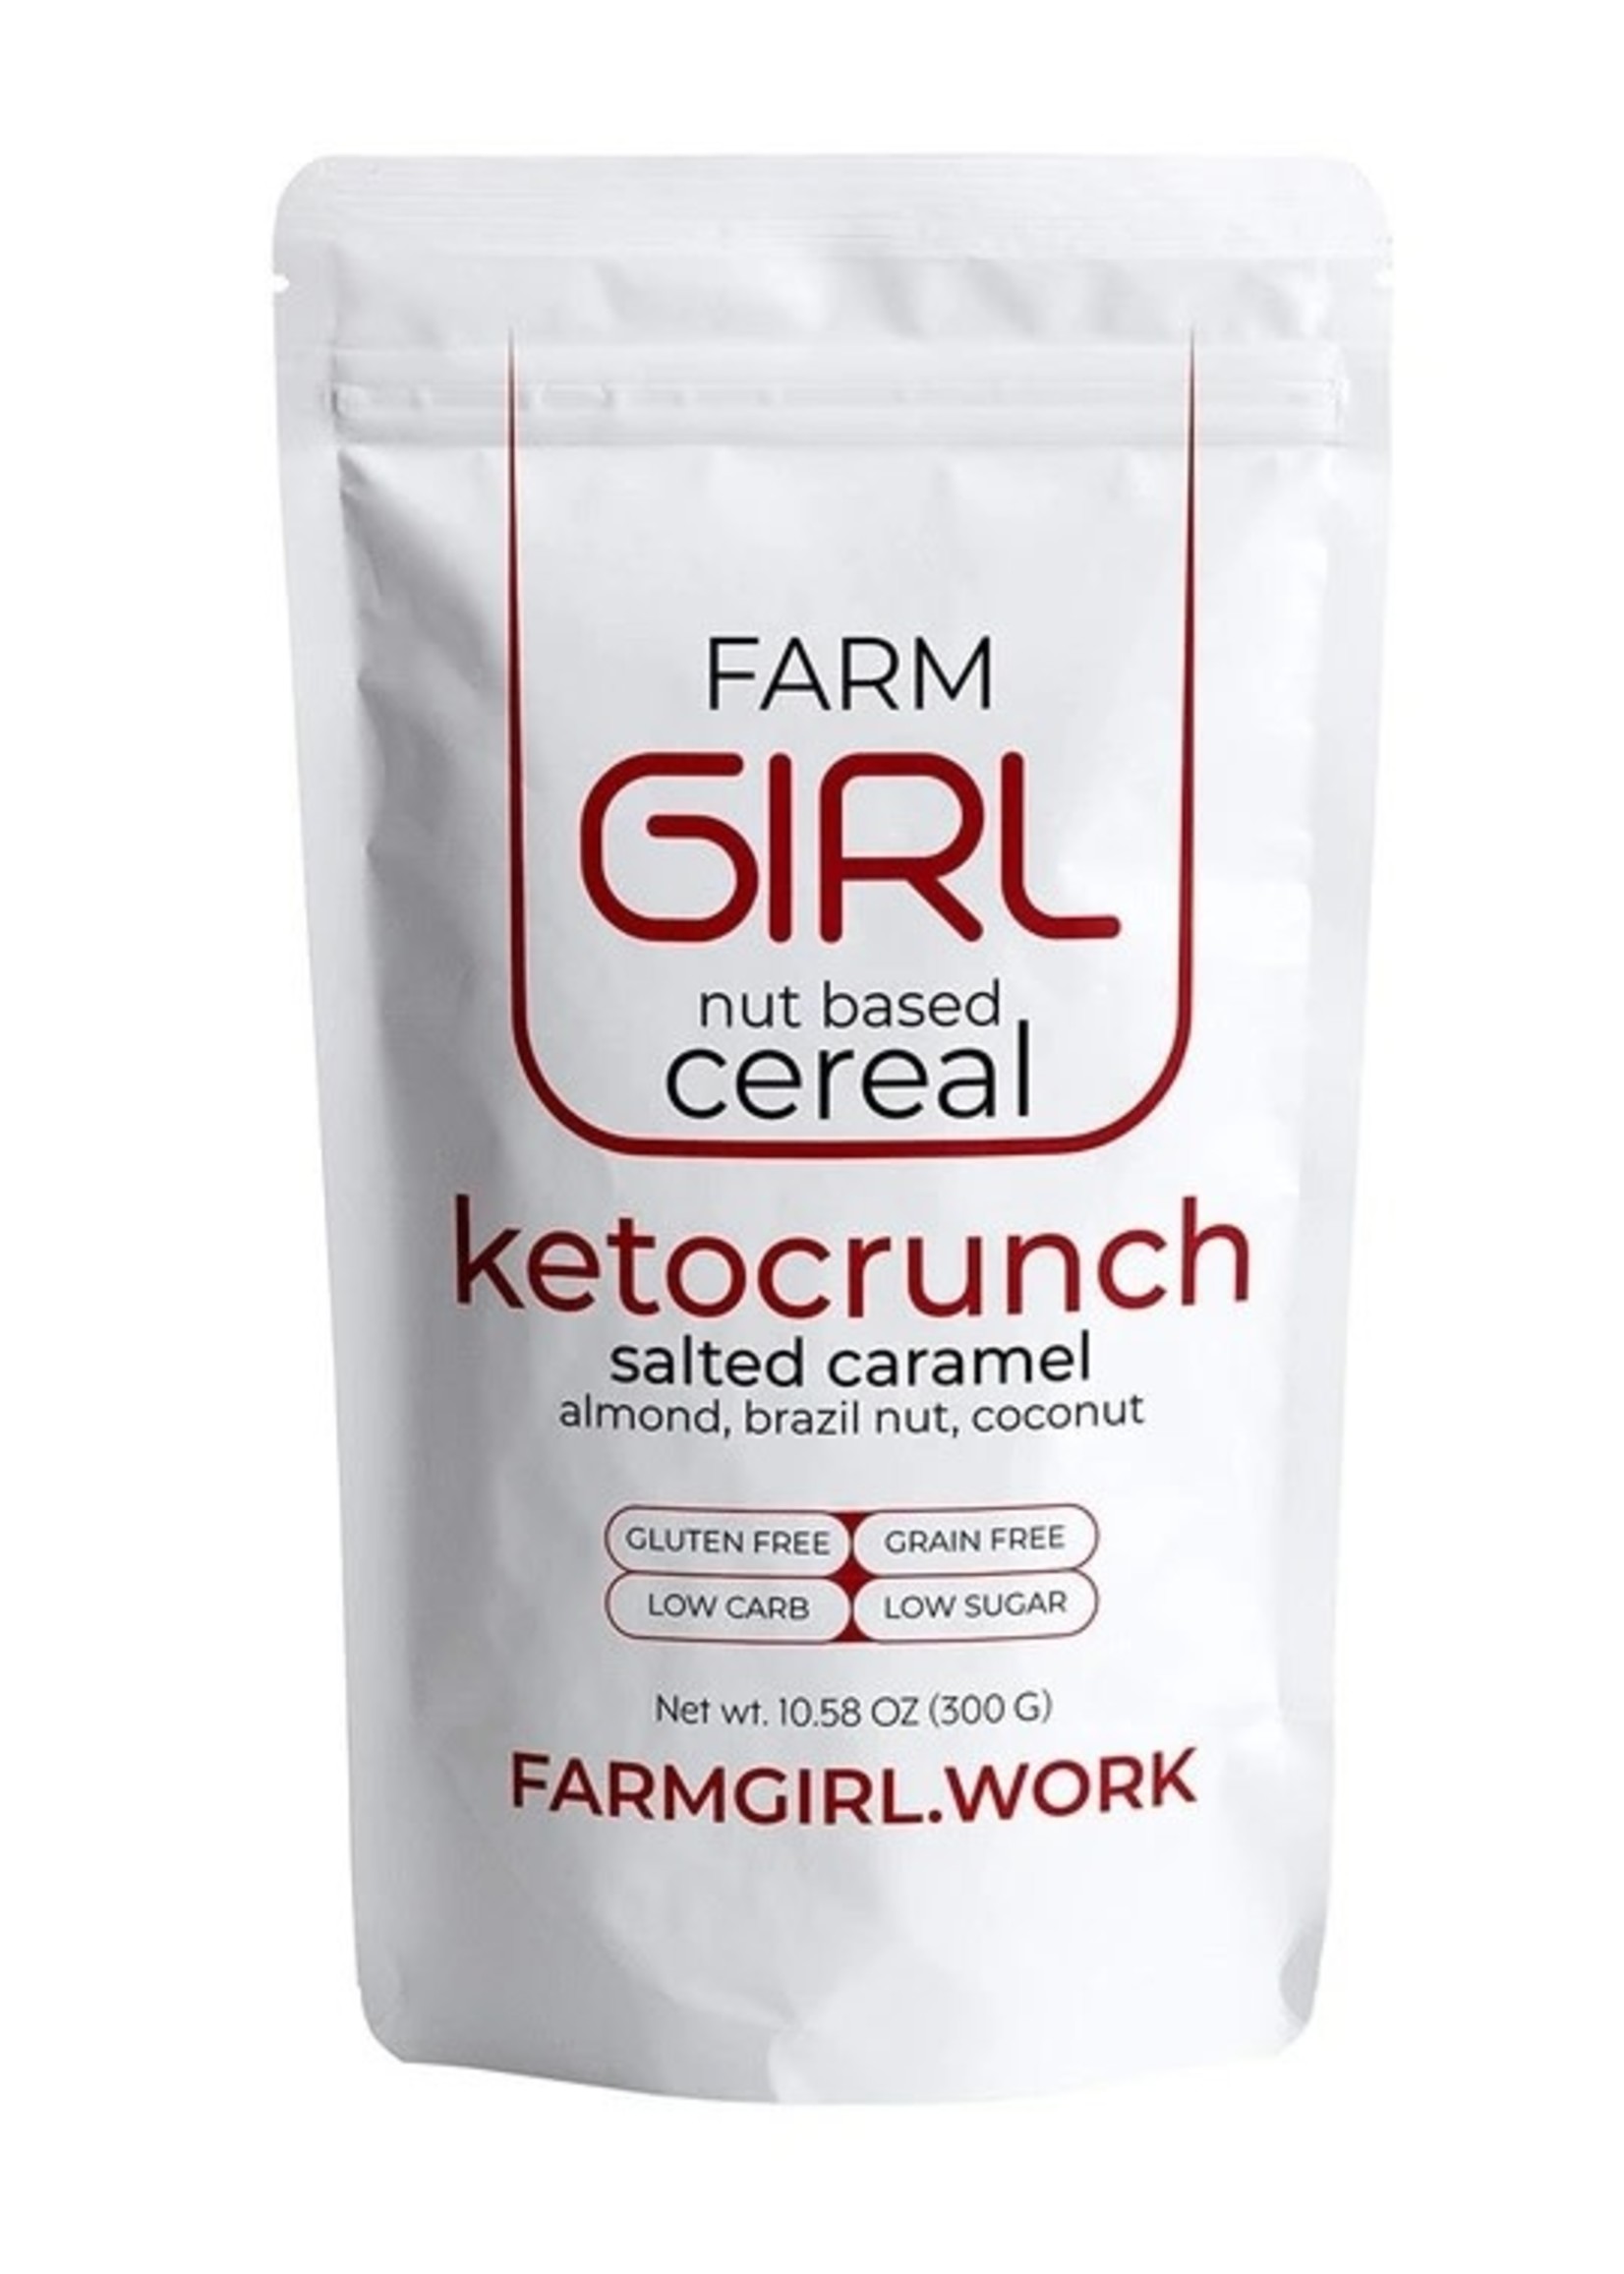 Farm Girl Farm Girl - Nut Based Cereal, Ketocrunch (300g)